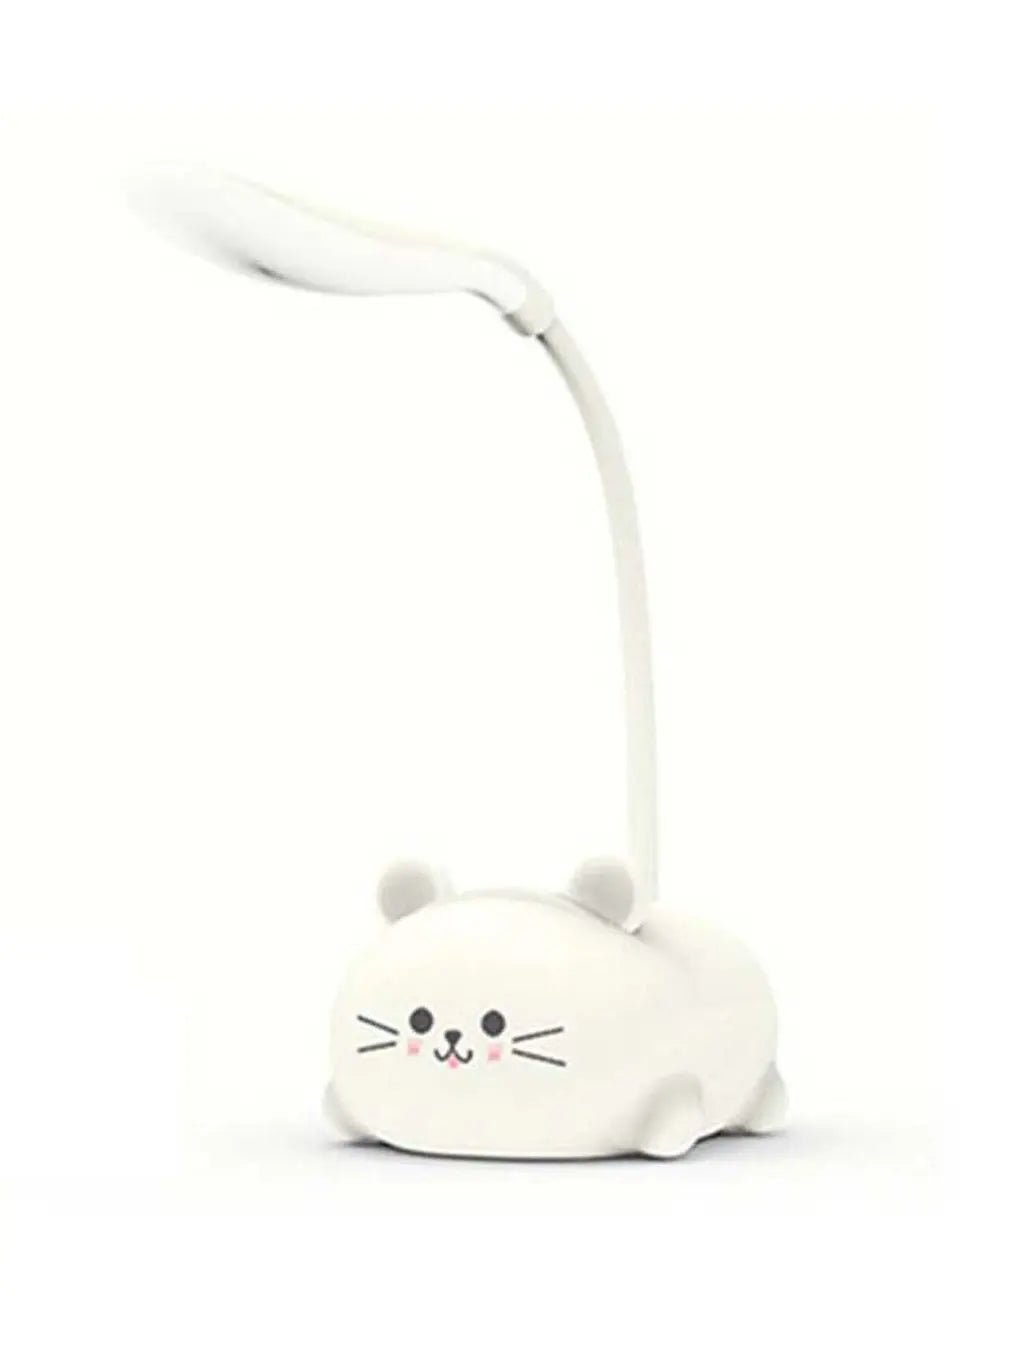 LED Cat-shaped Night Light - ZATShop White